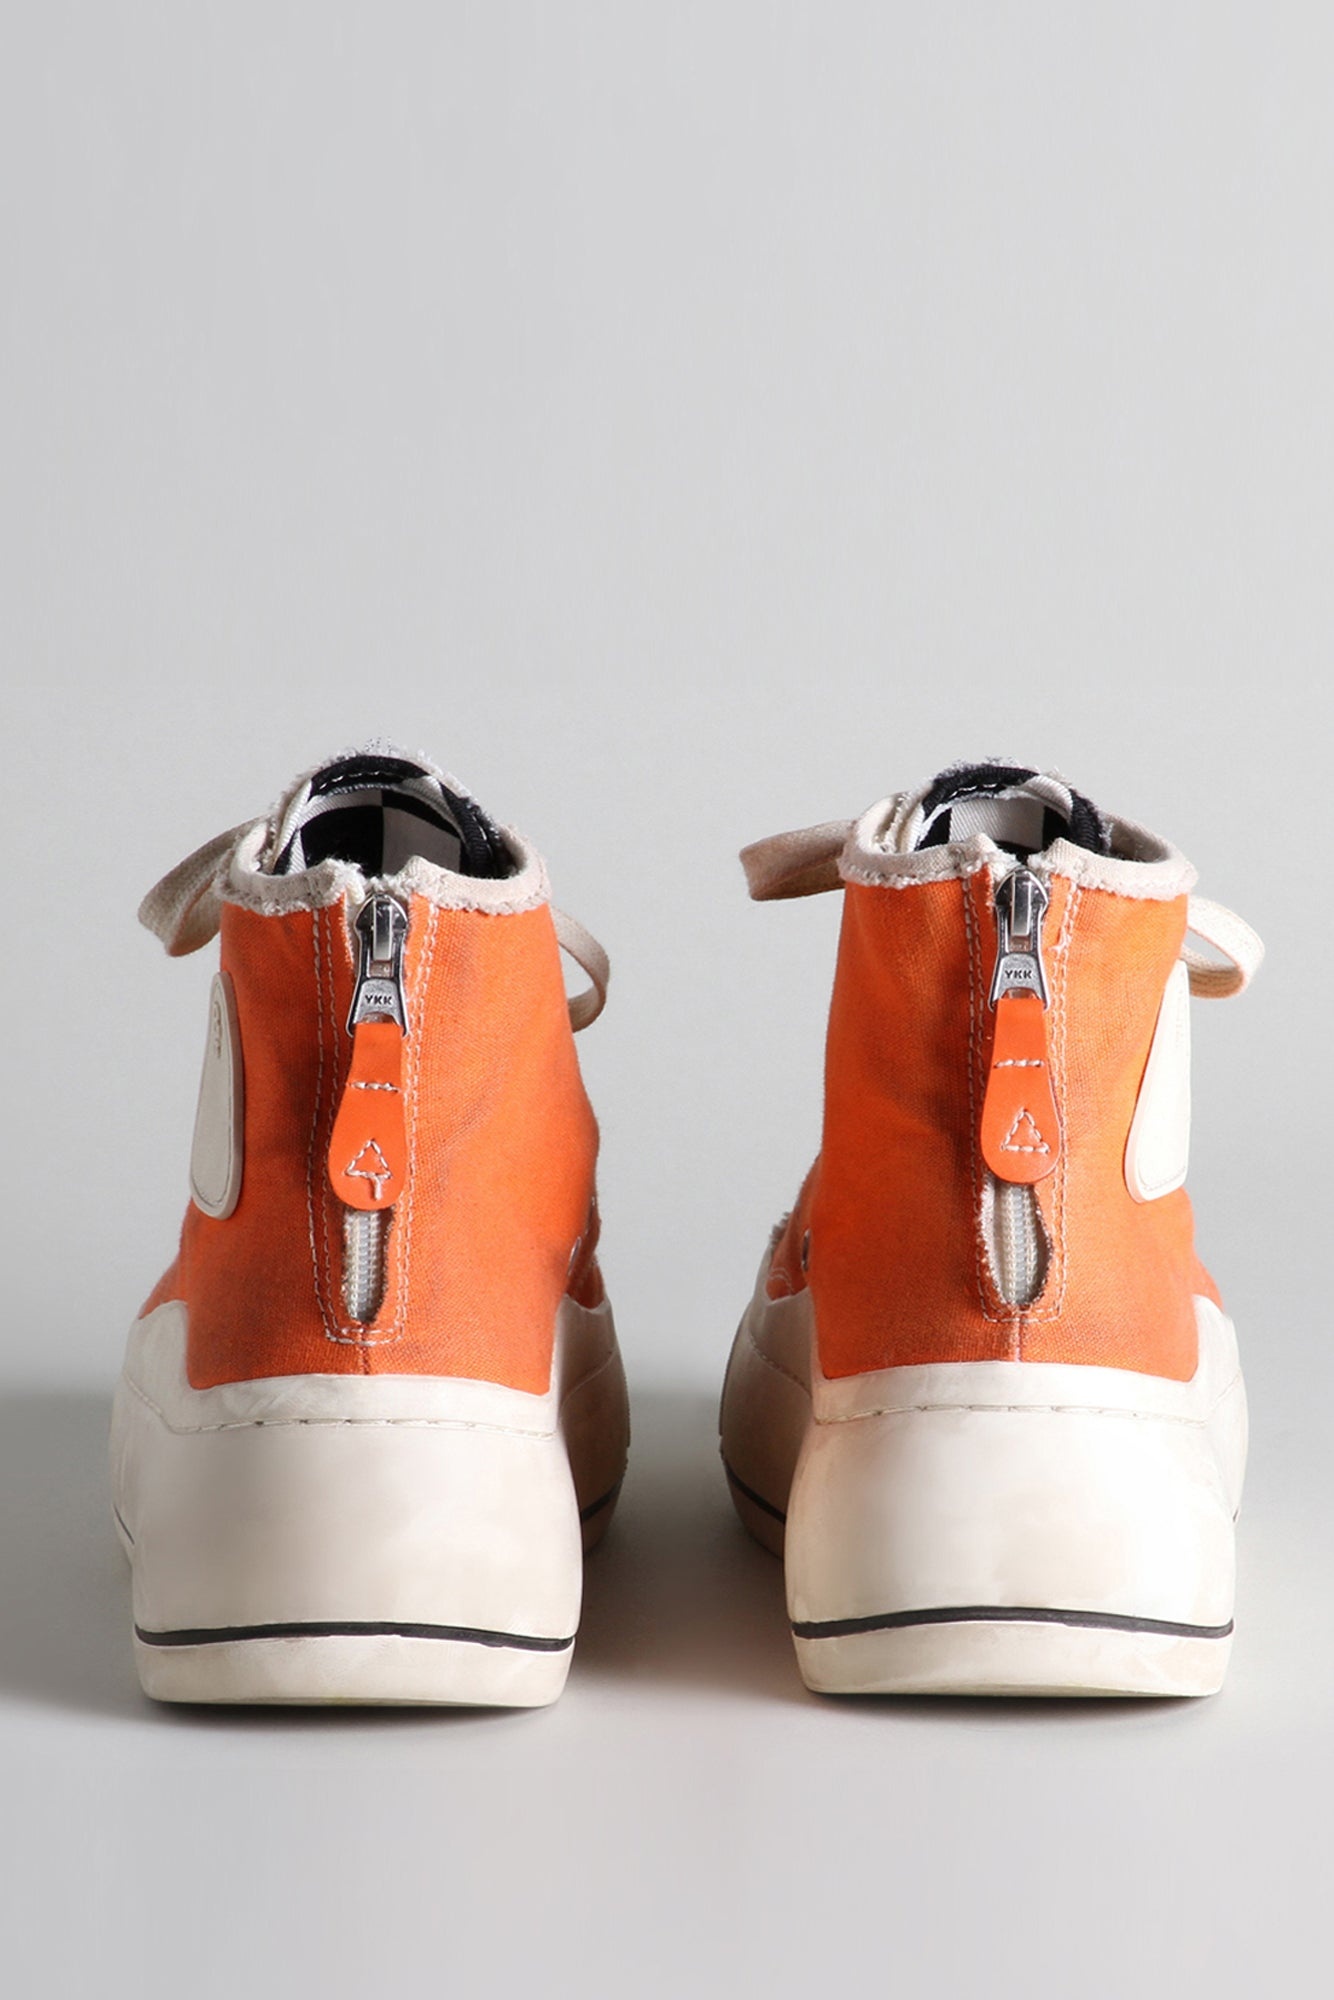 Kurt High Top Sneaker - Orange and Checker | R13 Denim Official Site - 3